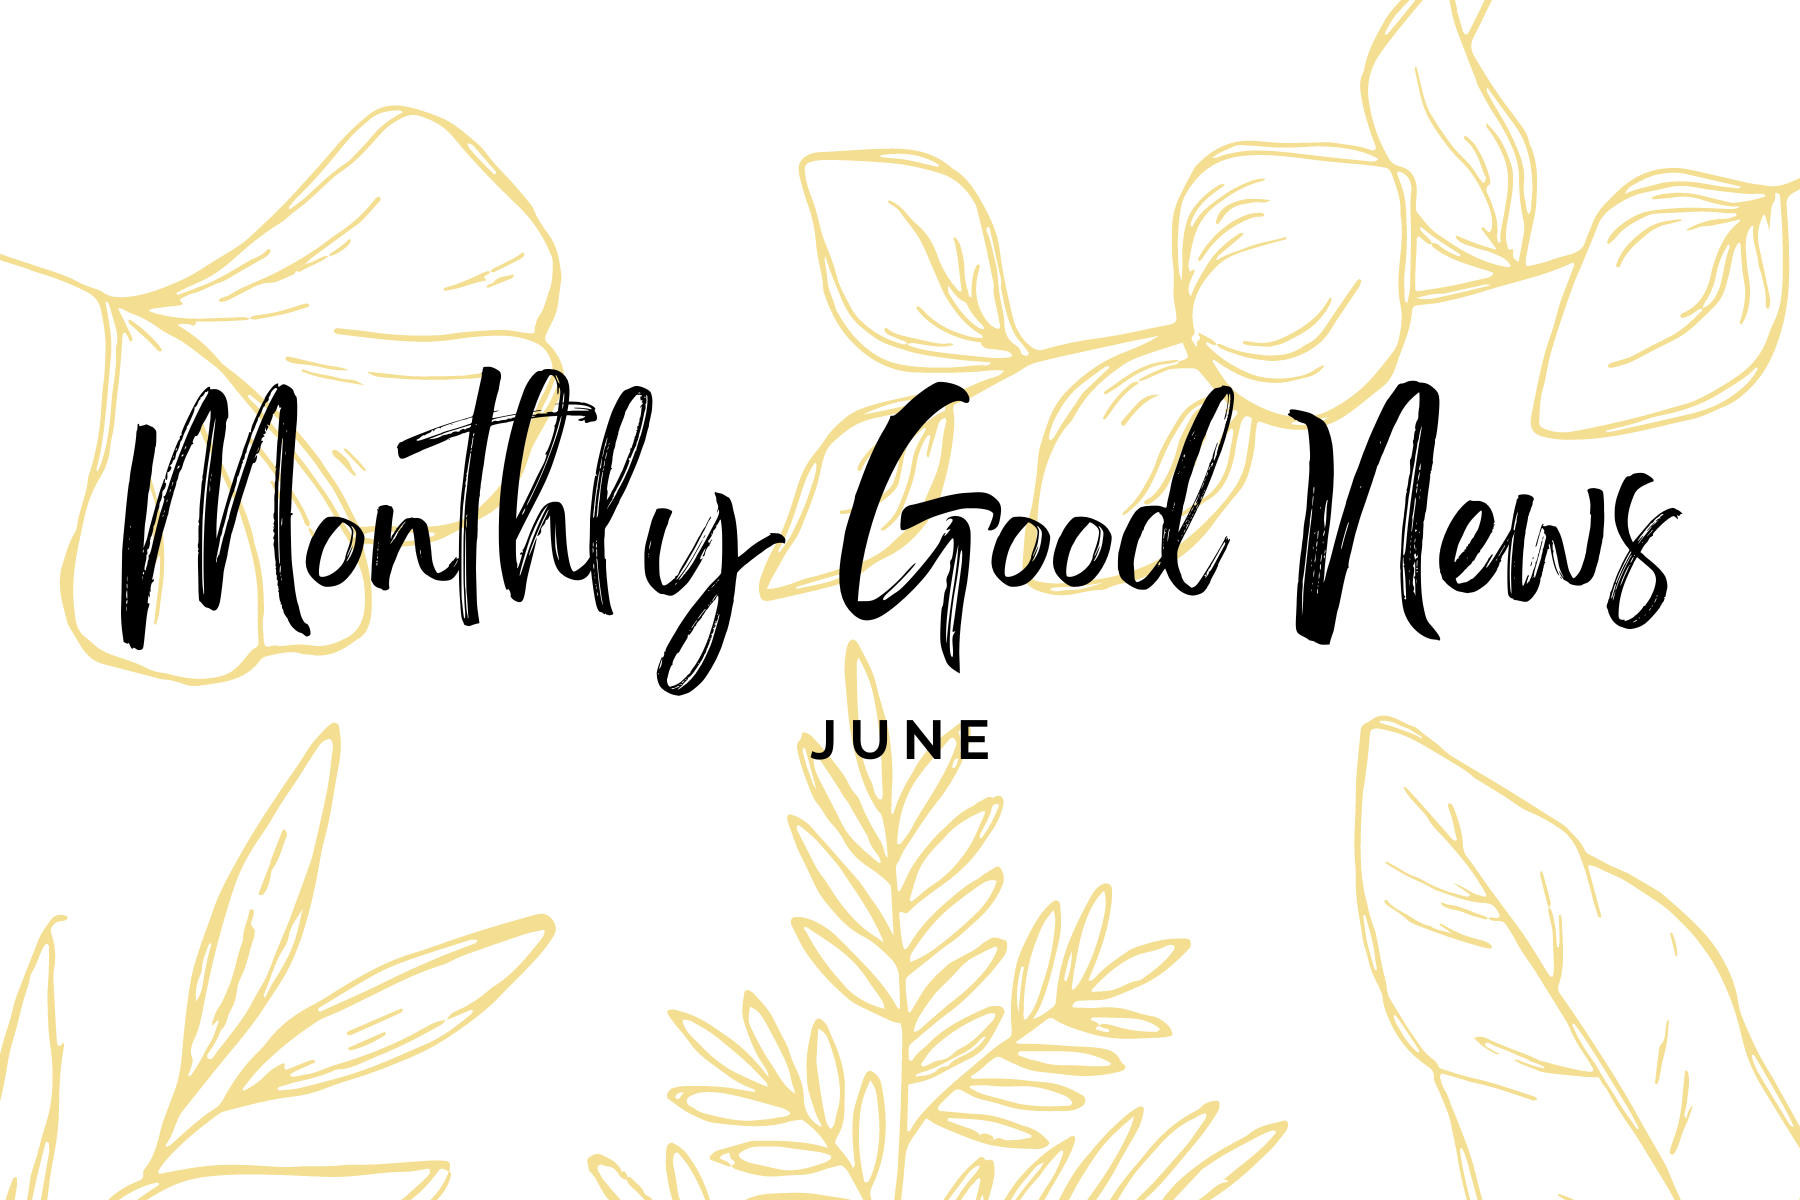 Monthly Good News #10: June